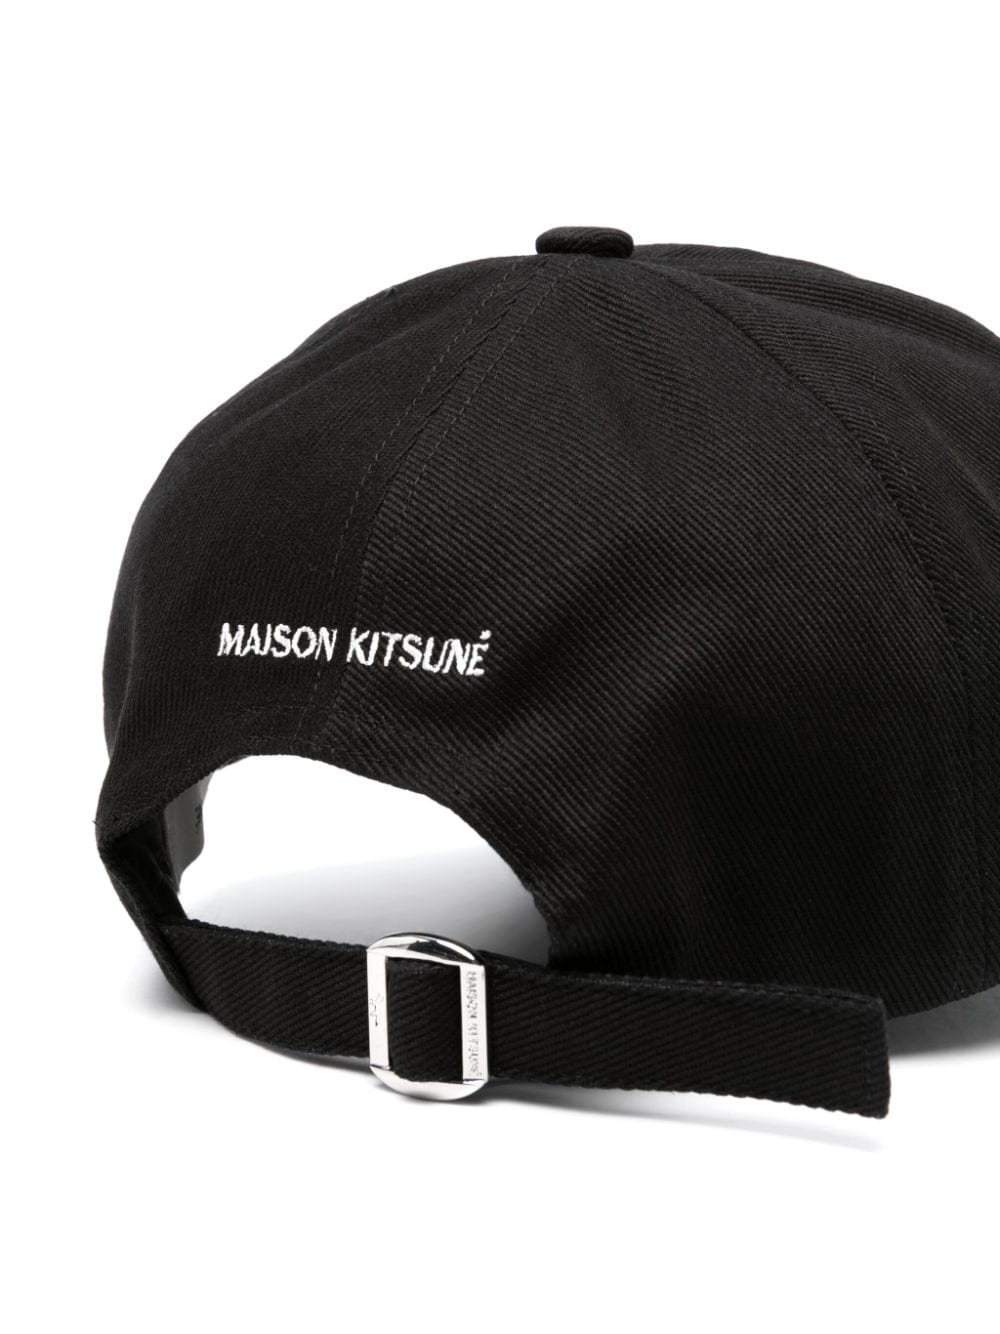 Maison Kitsune' Hats Black